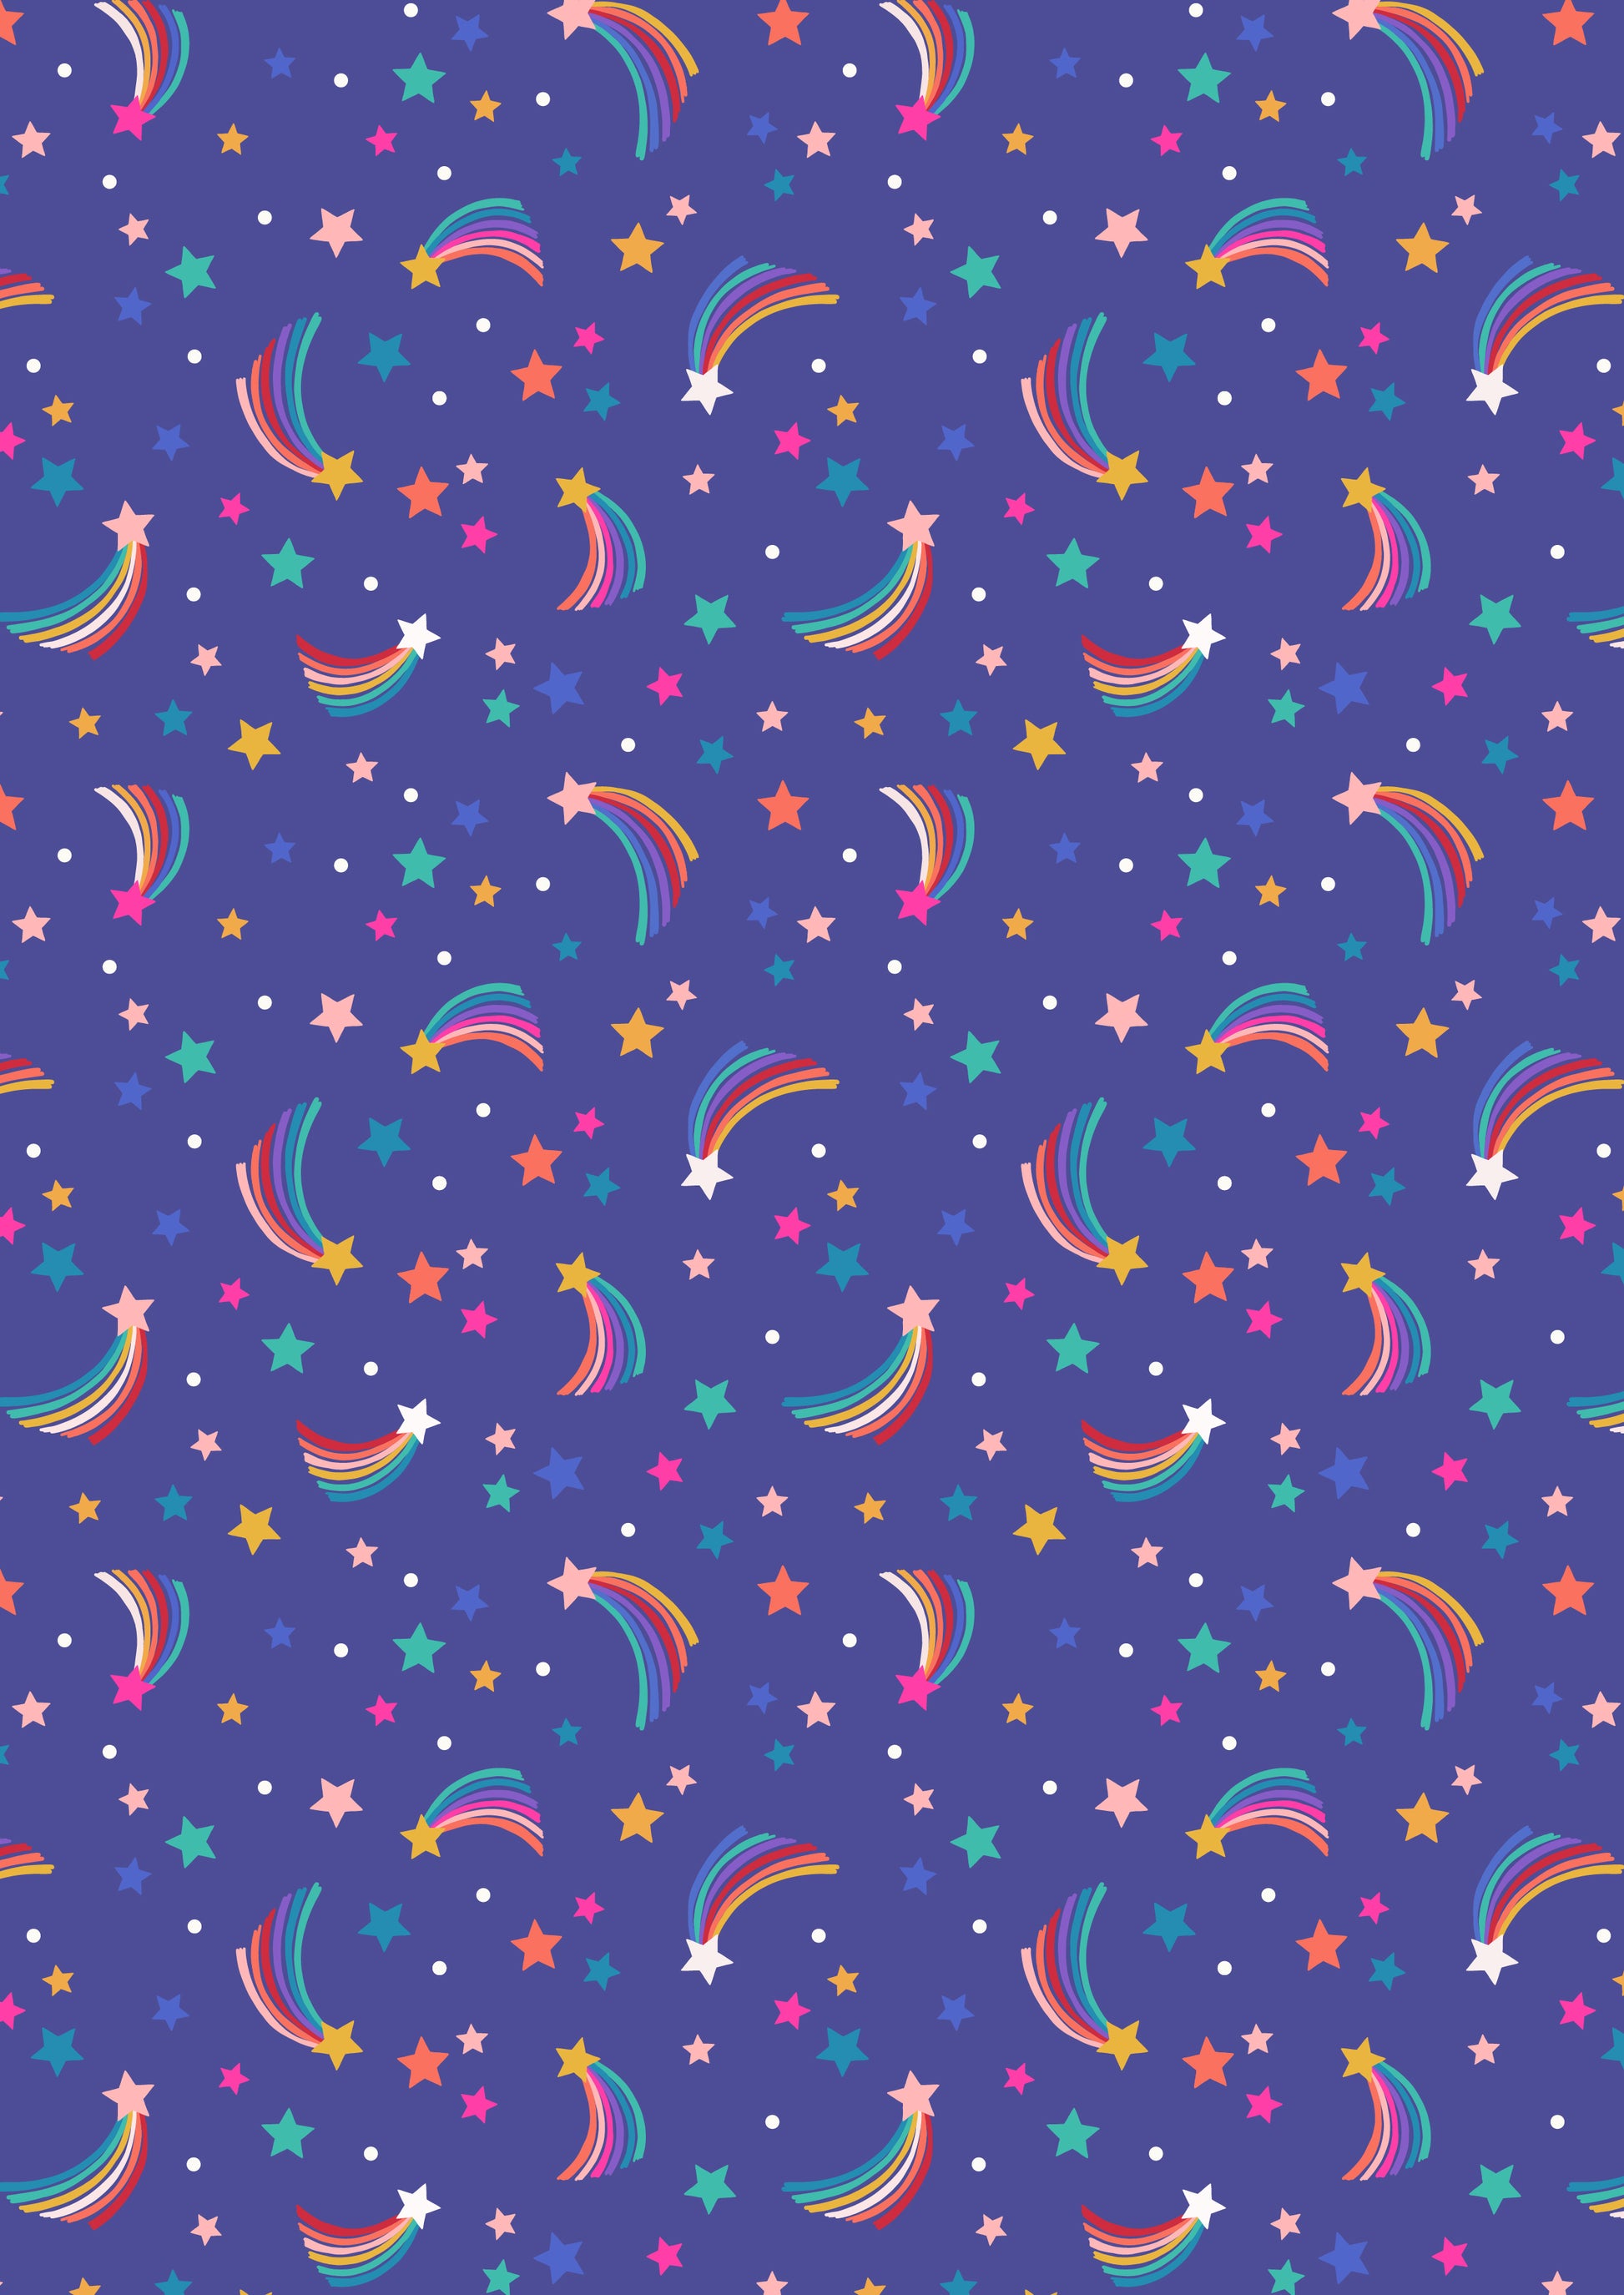 Lewis & Irene - Over The Rainbow - A580.2 - Shooting Rainbow Stars on Blue Fabric